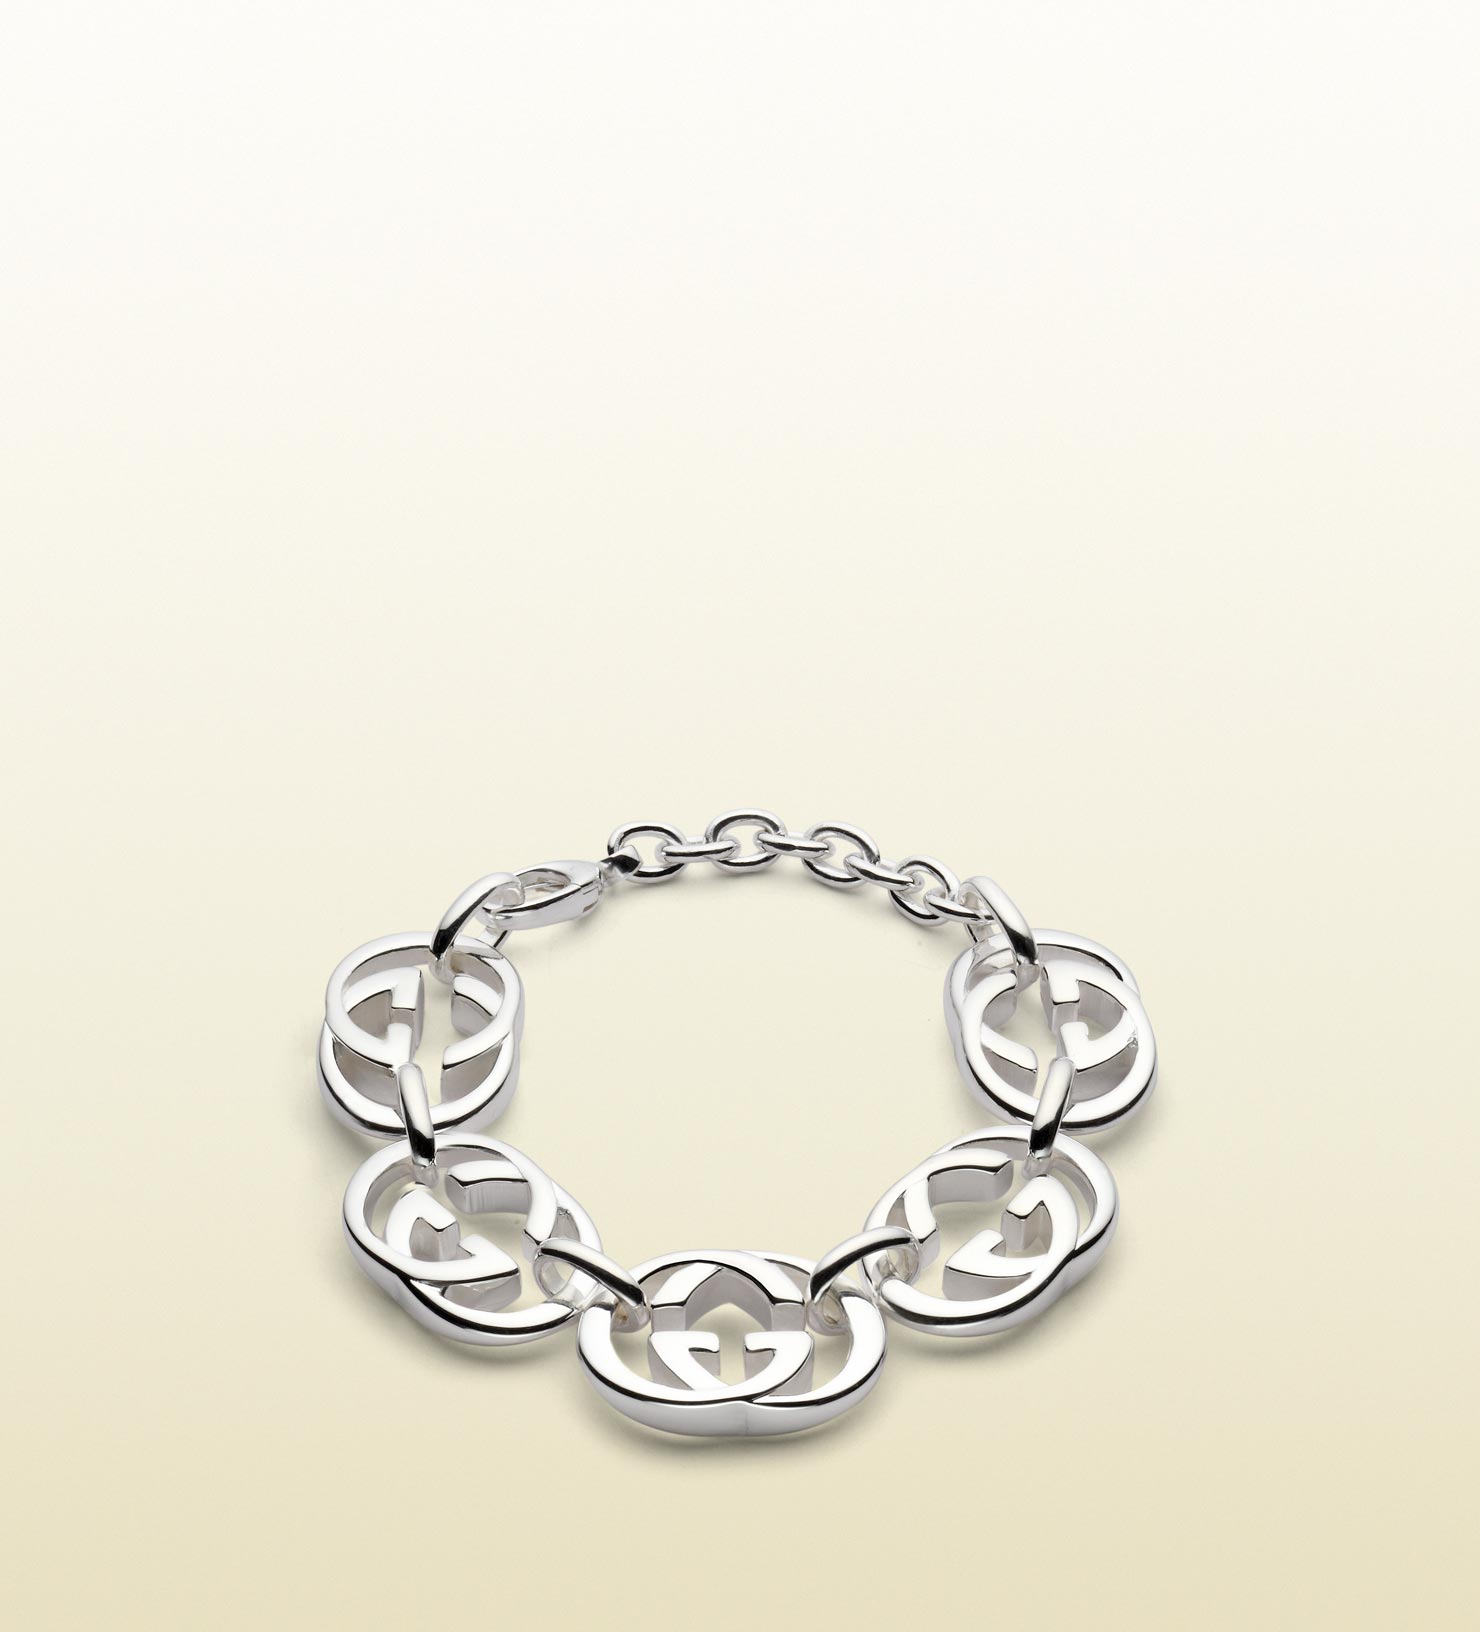 Lyst - Gucci Bracelet with Interlocking G Motif in Metallic